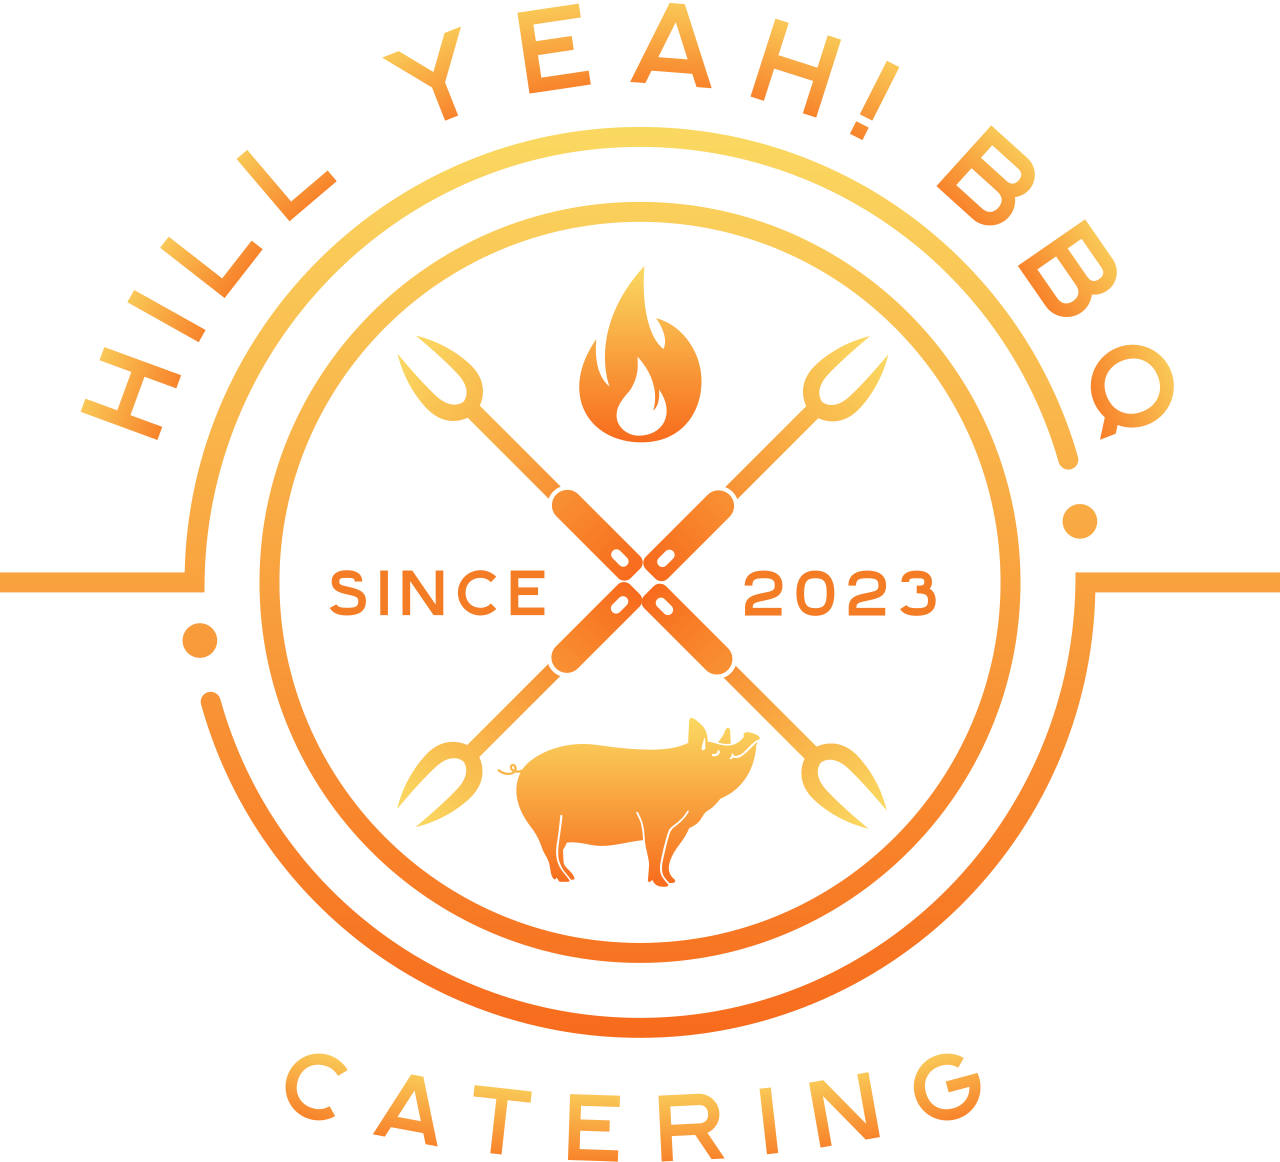 HILL YEAH! BBQ's logo